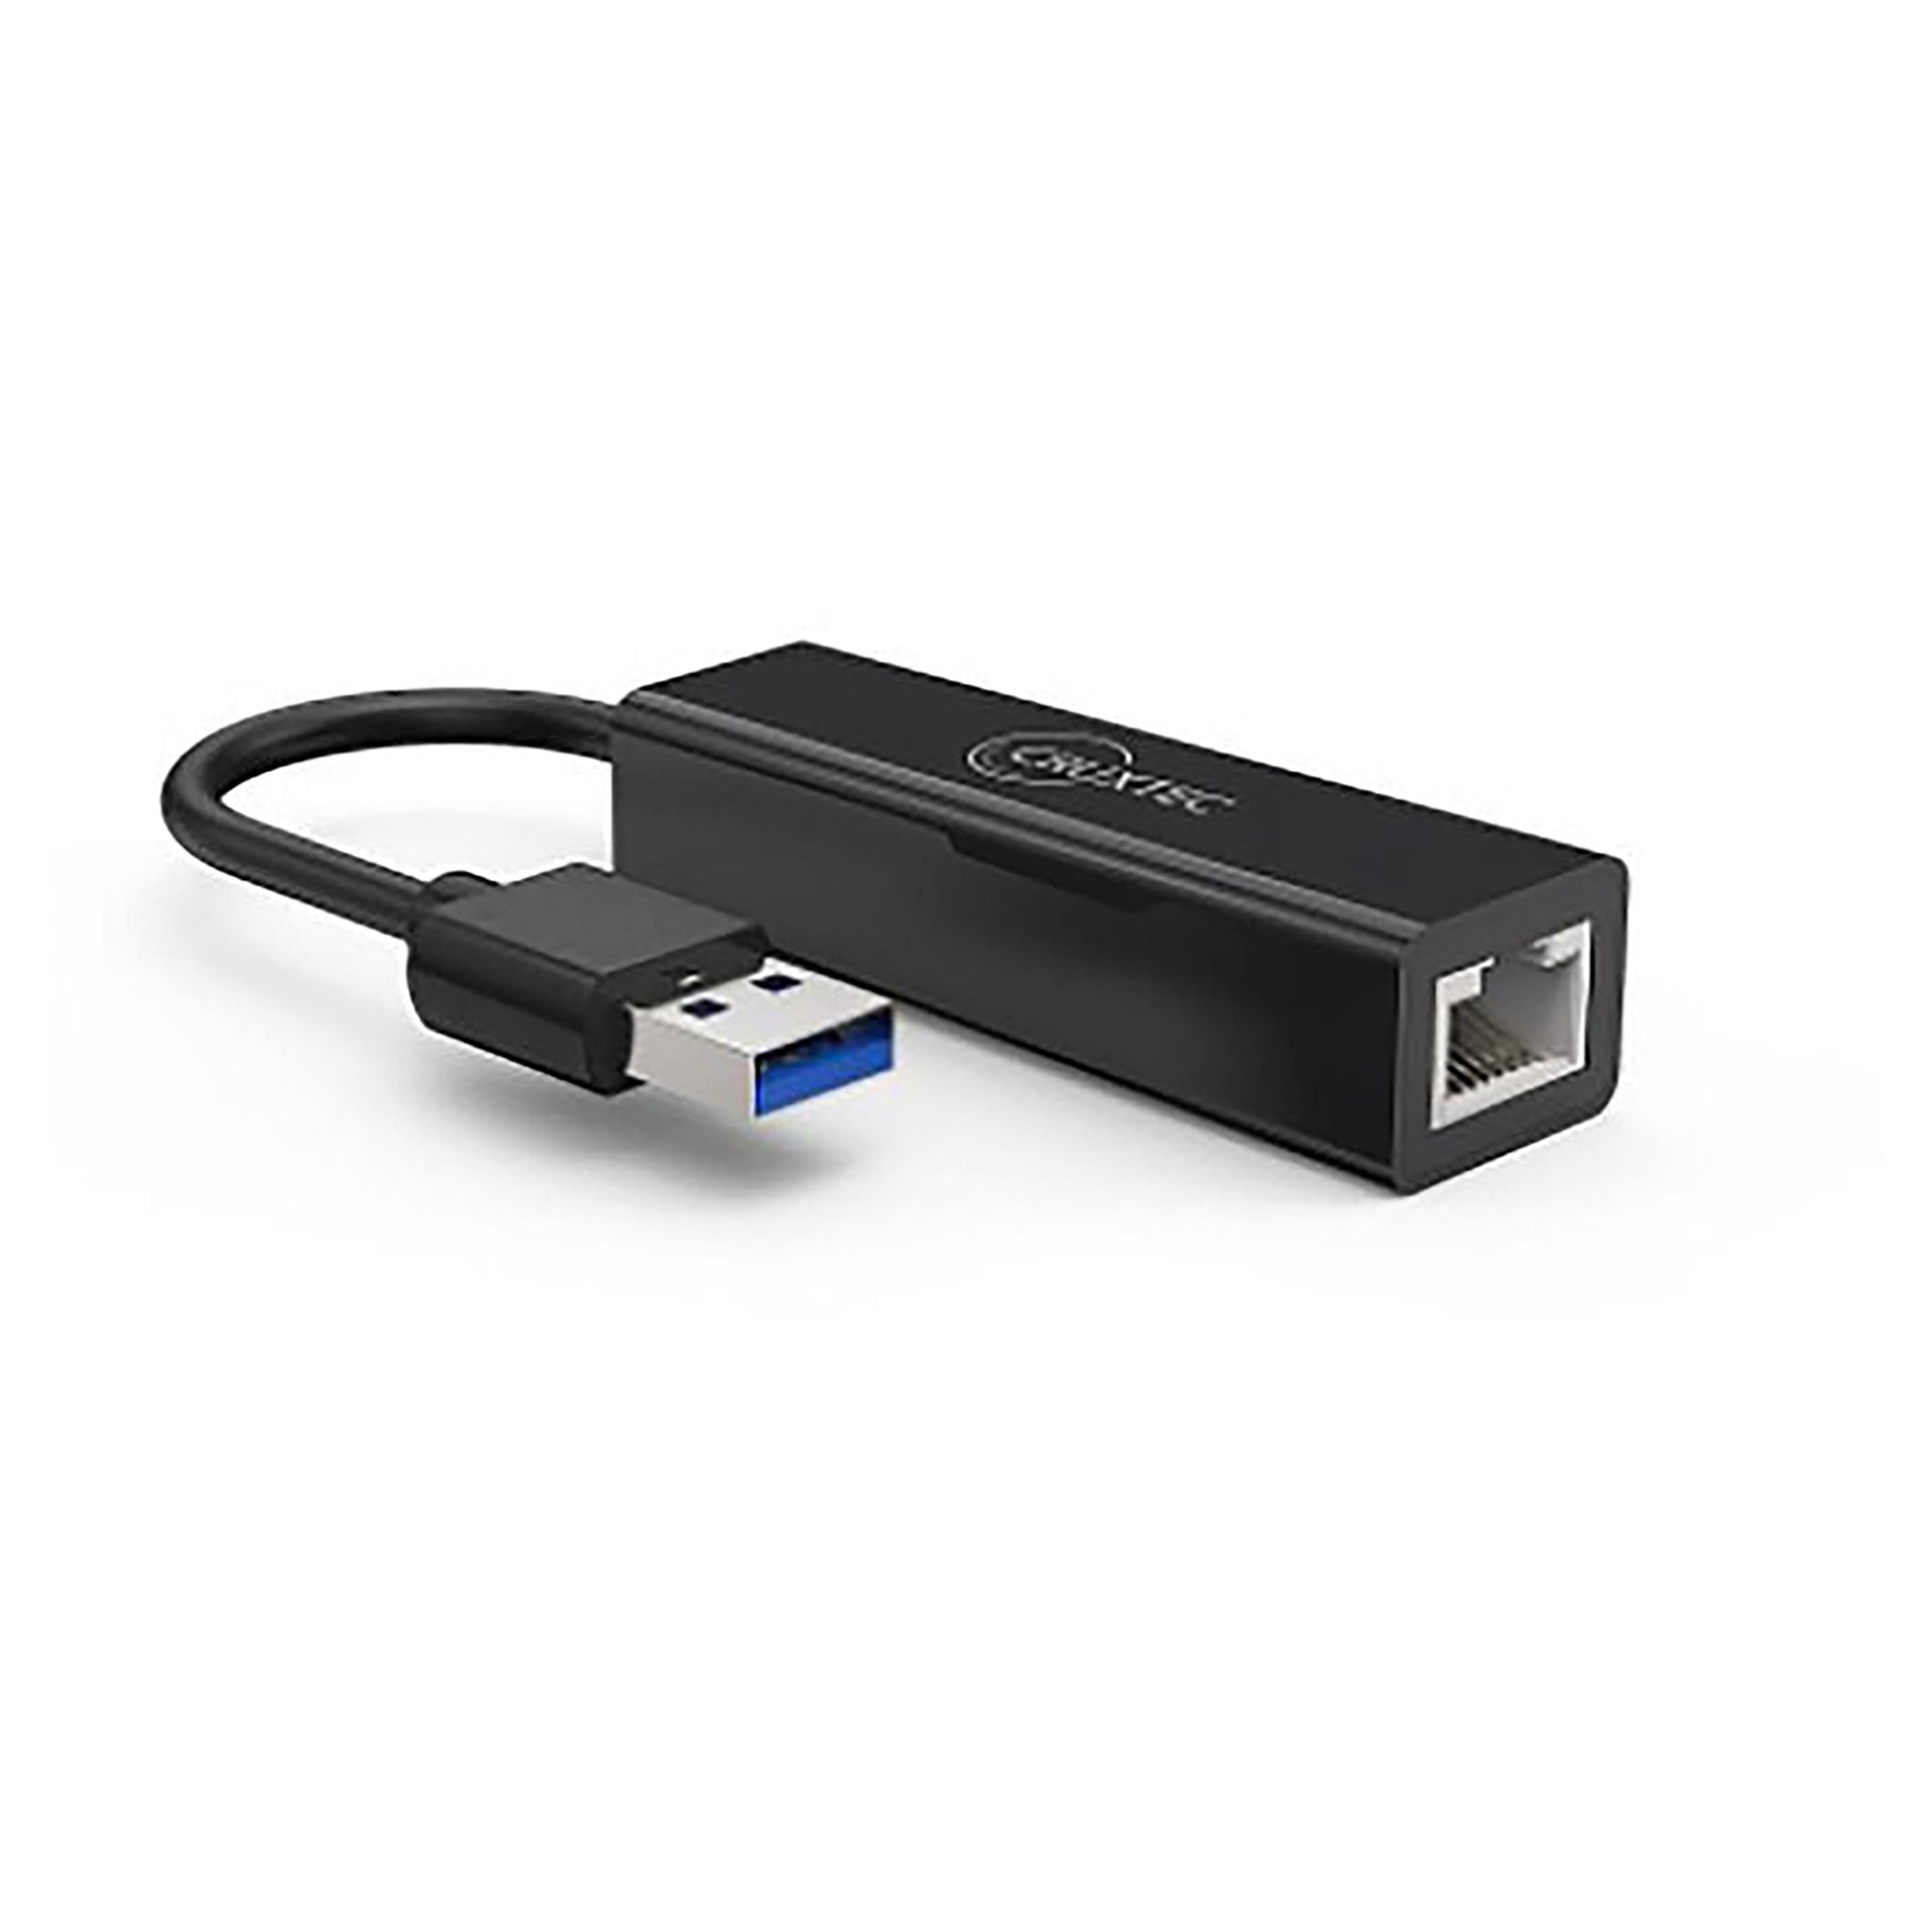 Cruxtec UTRU3-BK USB3.0 to RJ45 Gigabit Ethernet Network Adapter